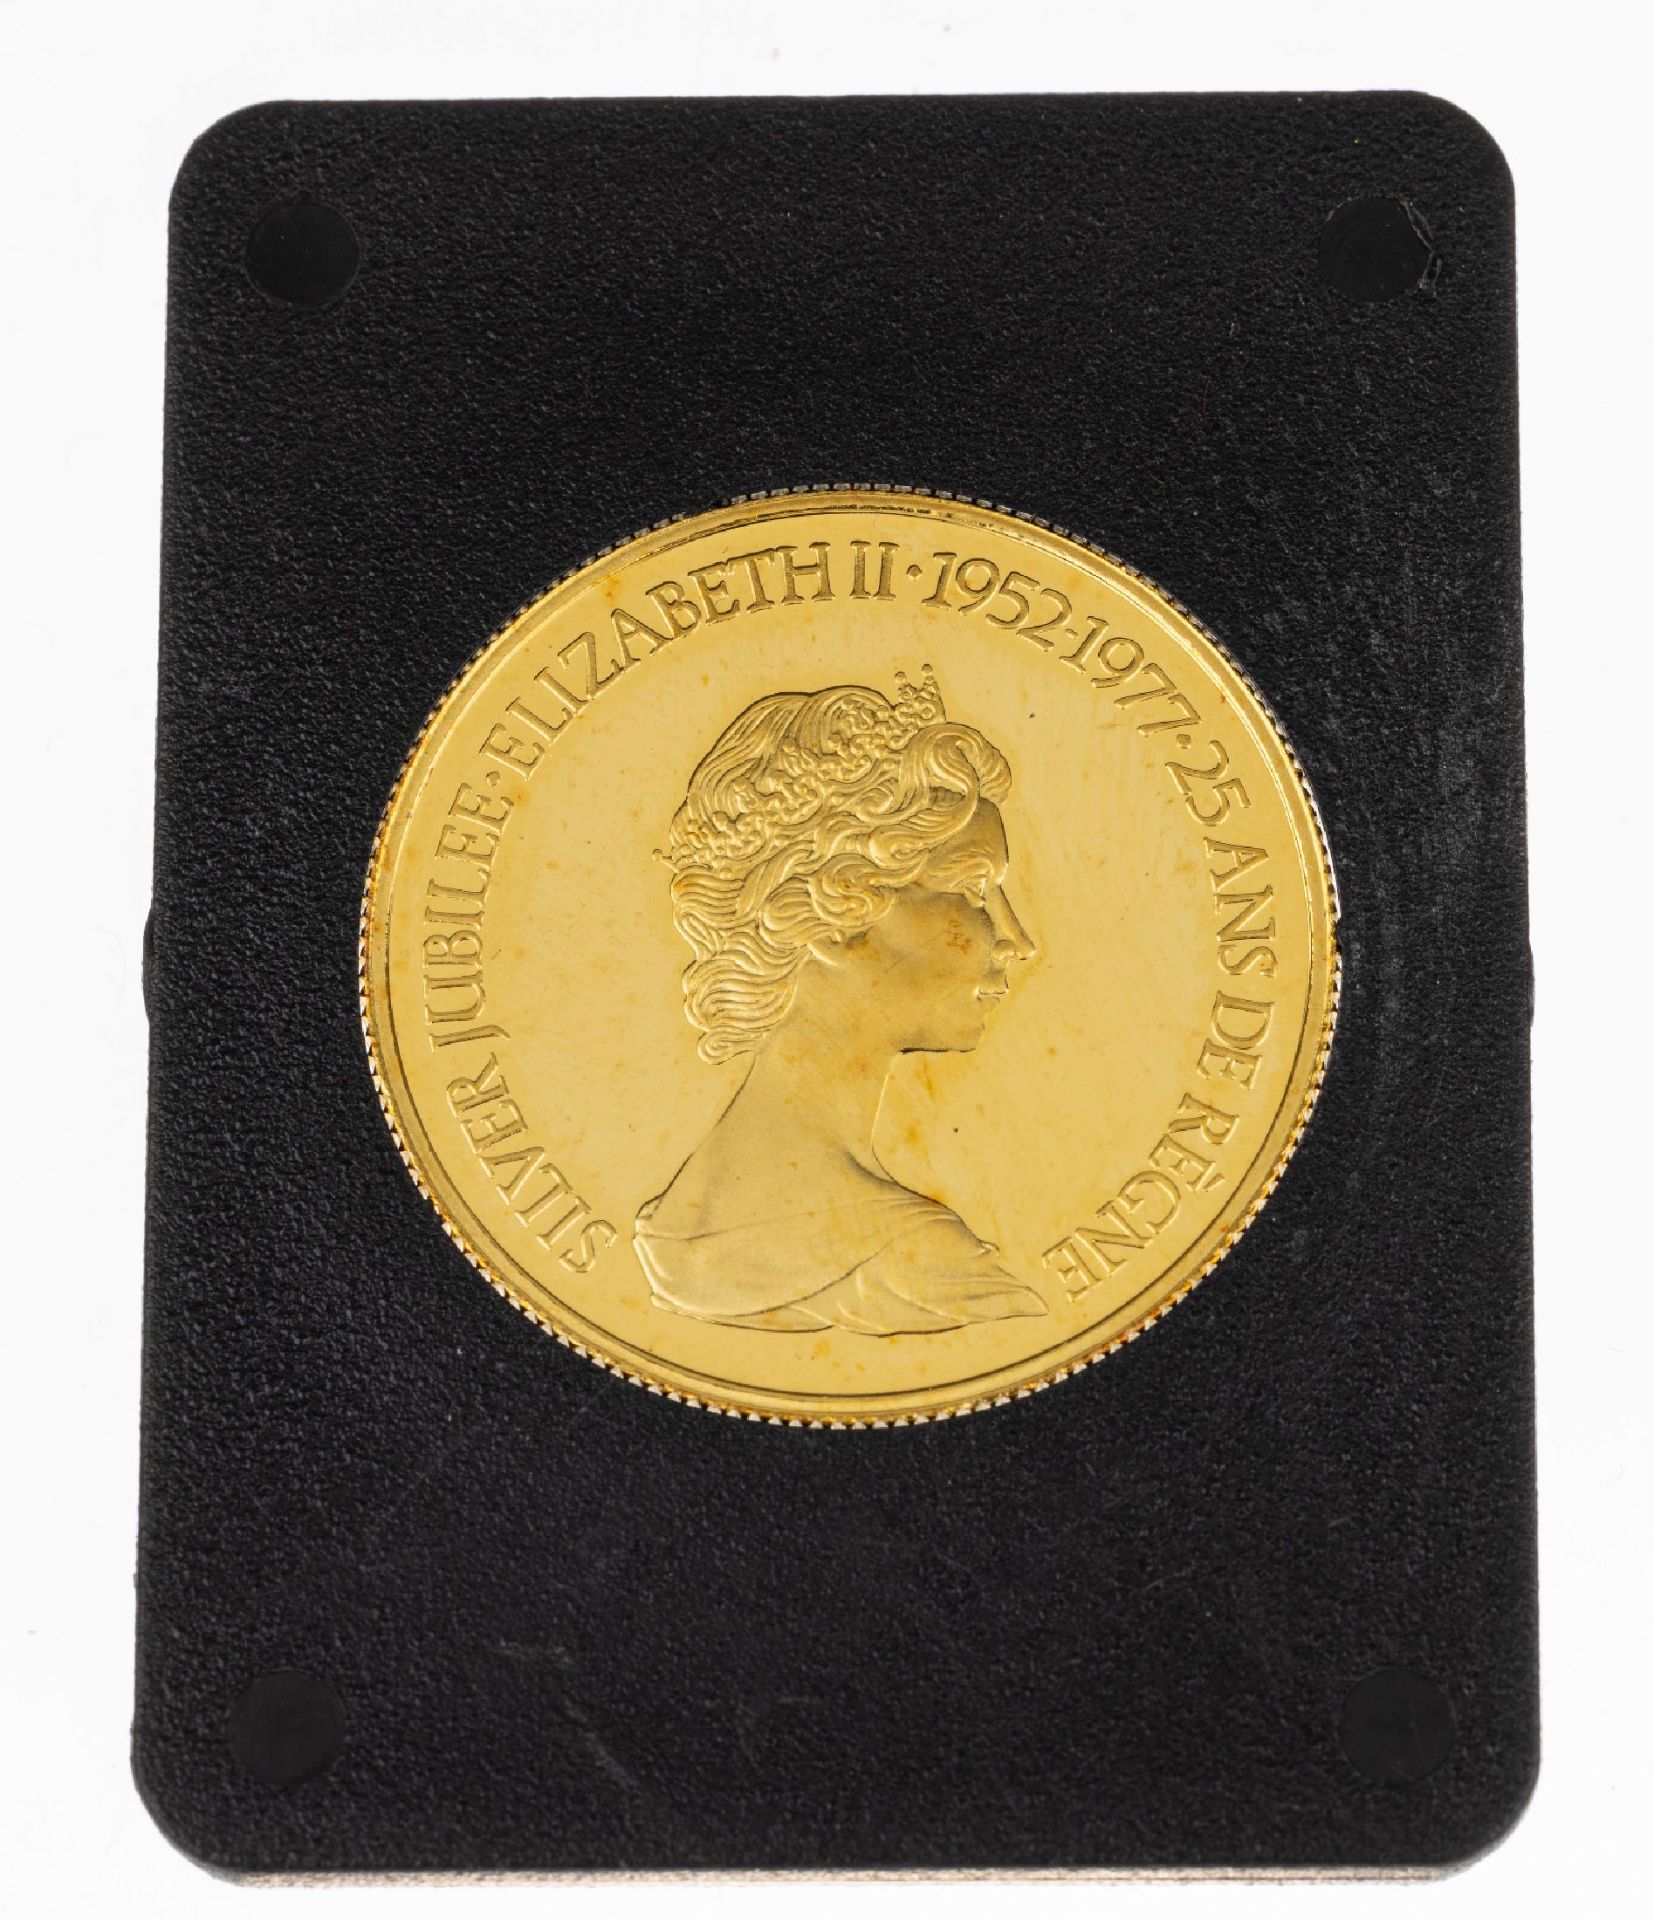 Goldmünze 100 Dollar, Kanada 1977, zum 25. jährigen